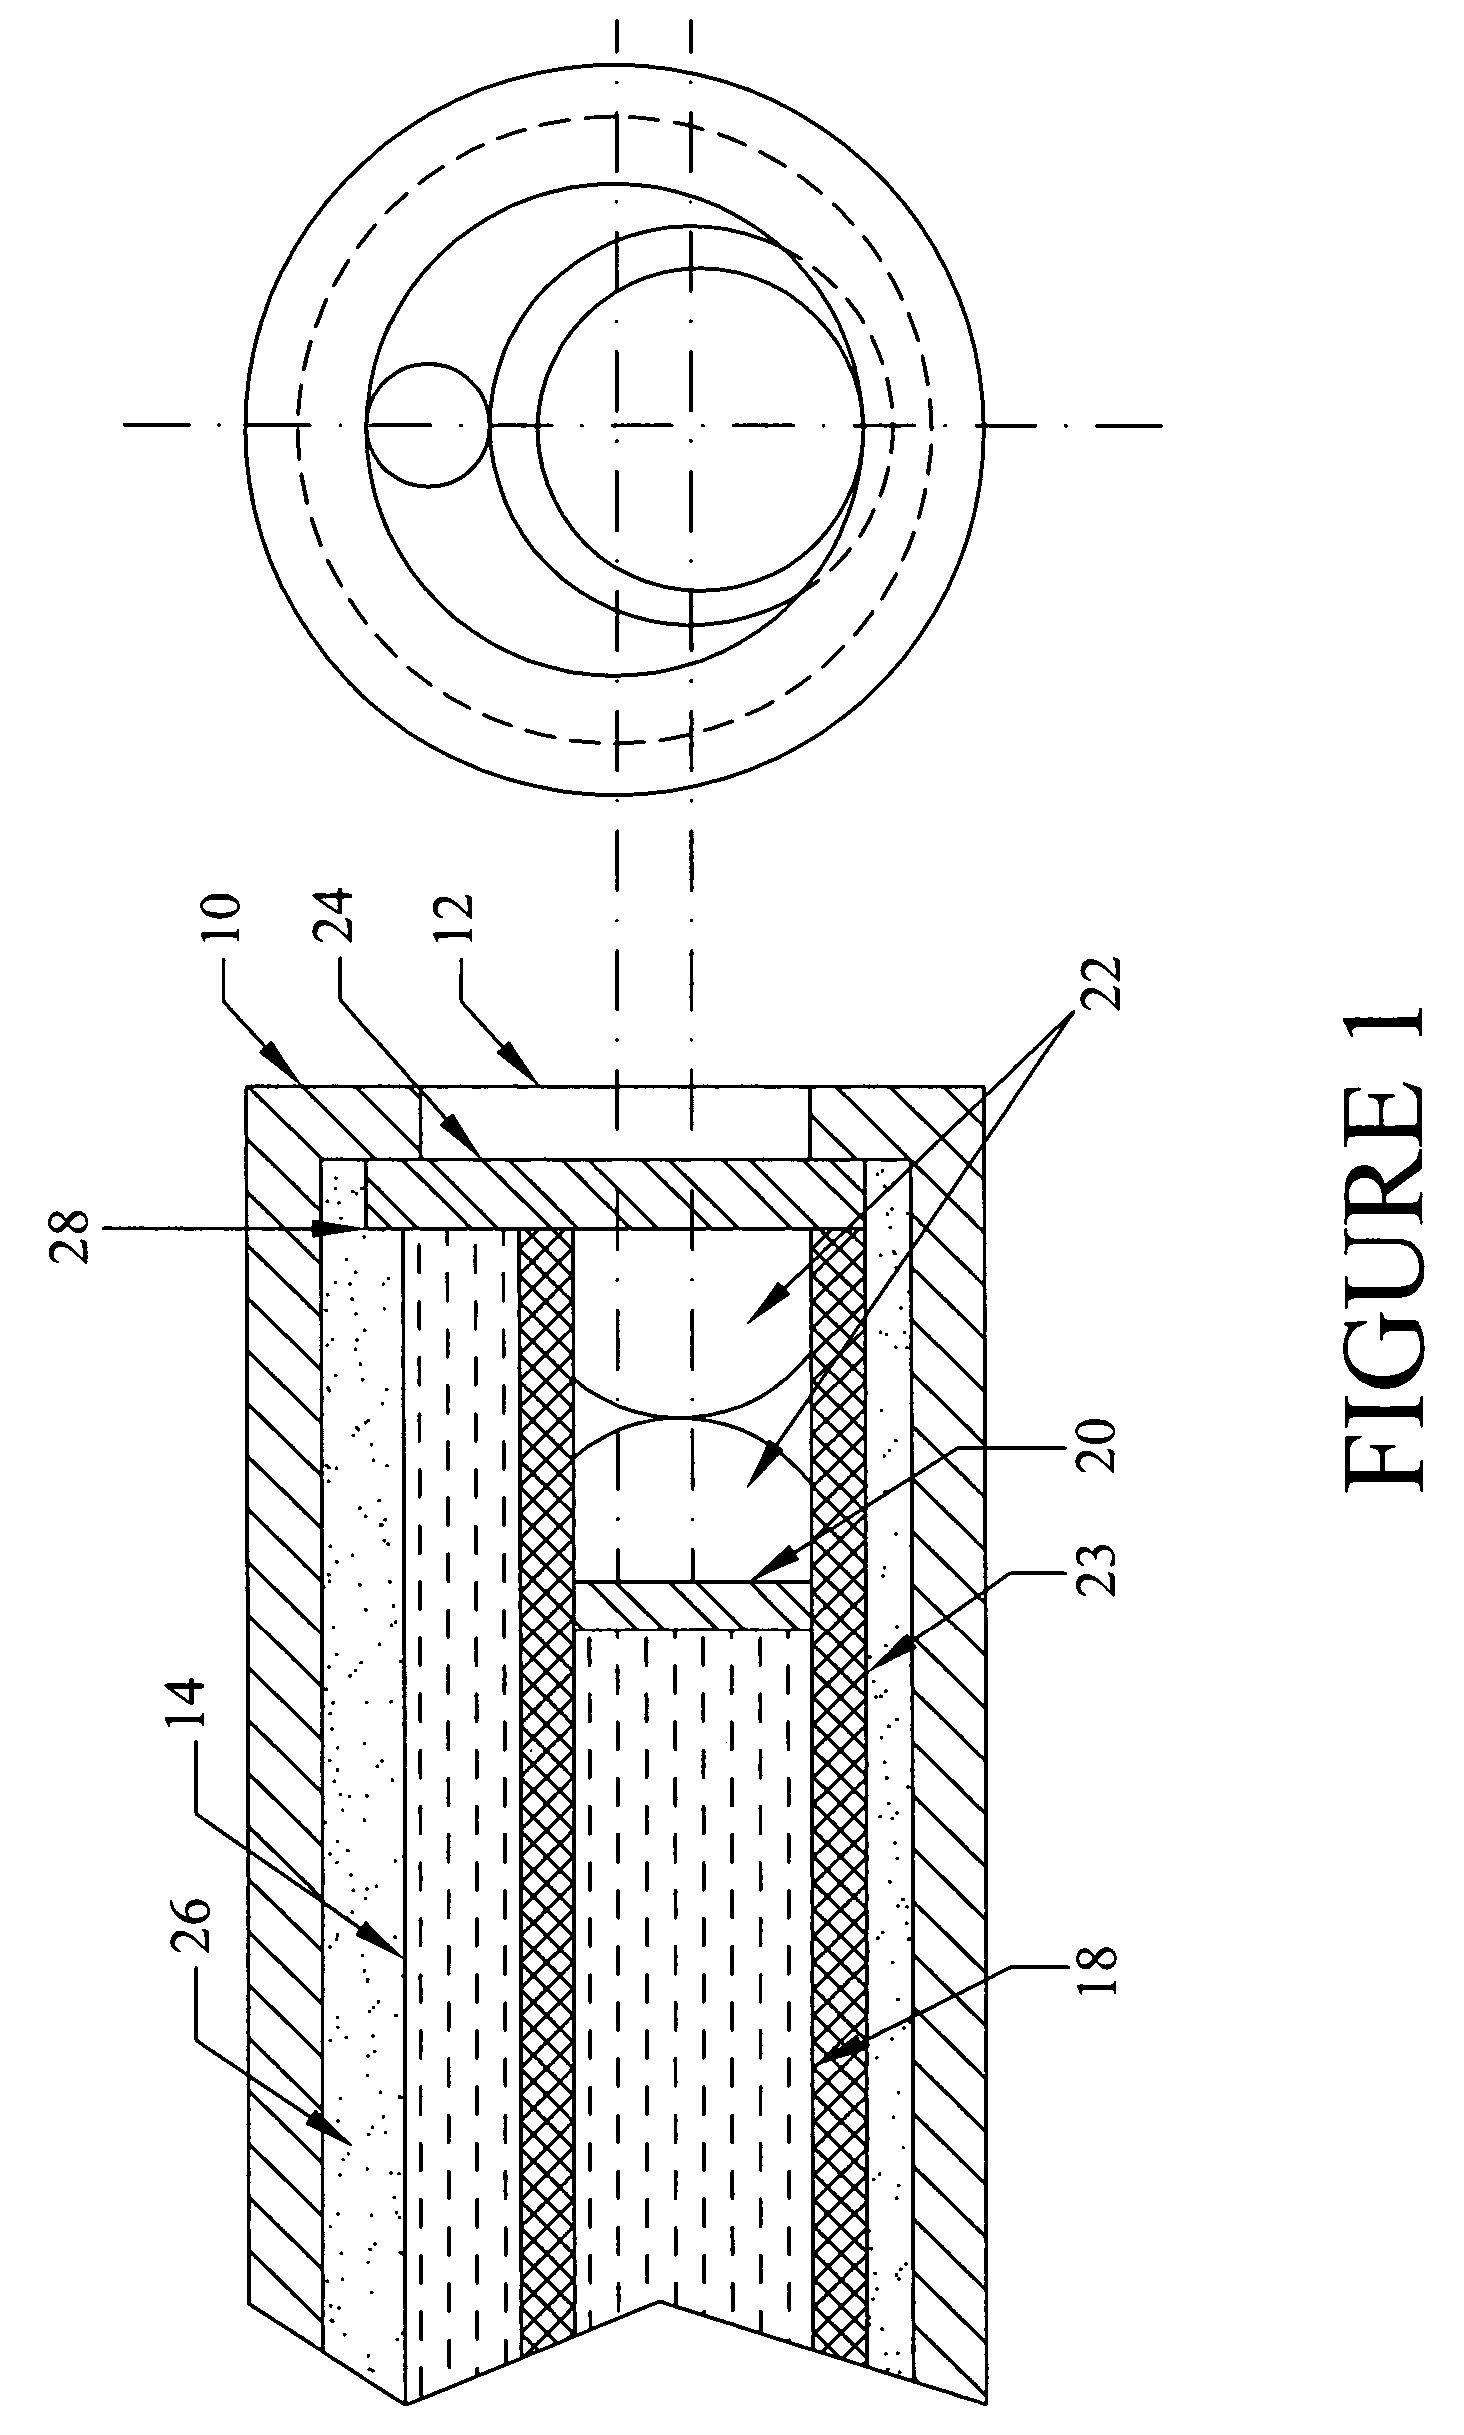 Method and apparatus for fiberscope